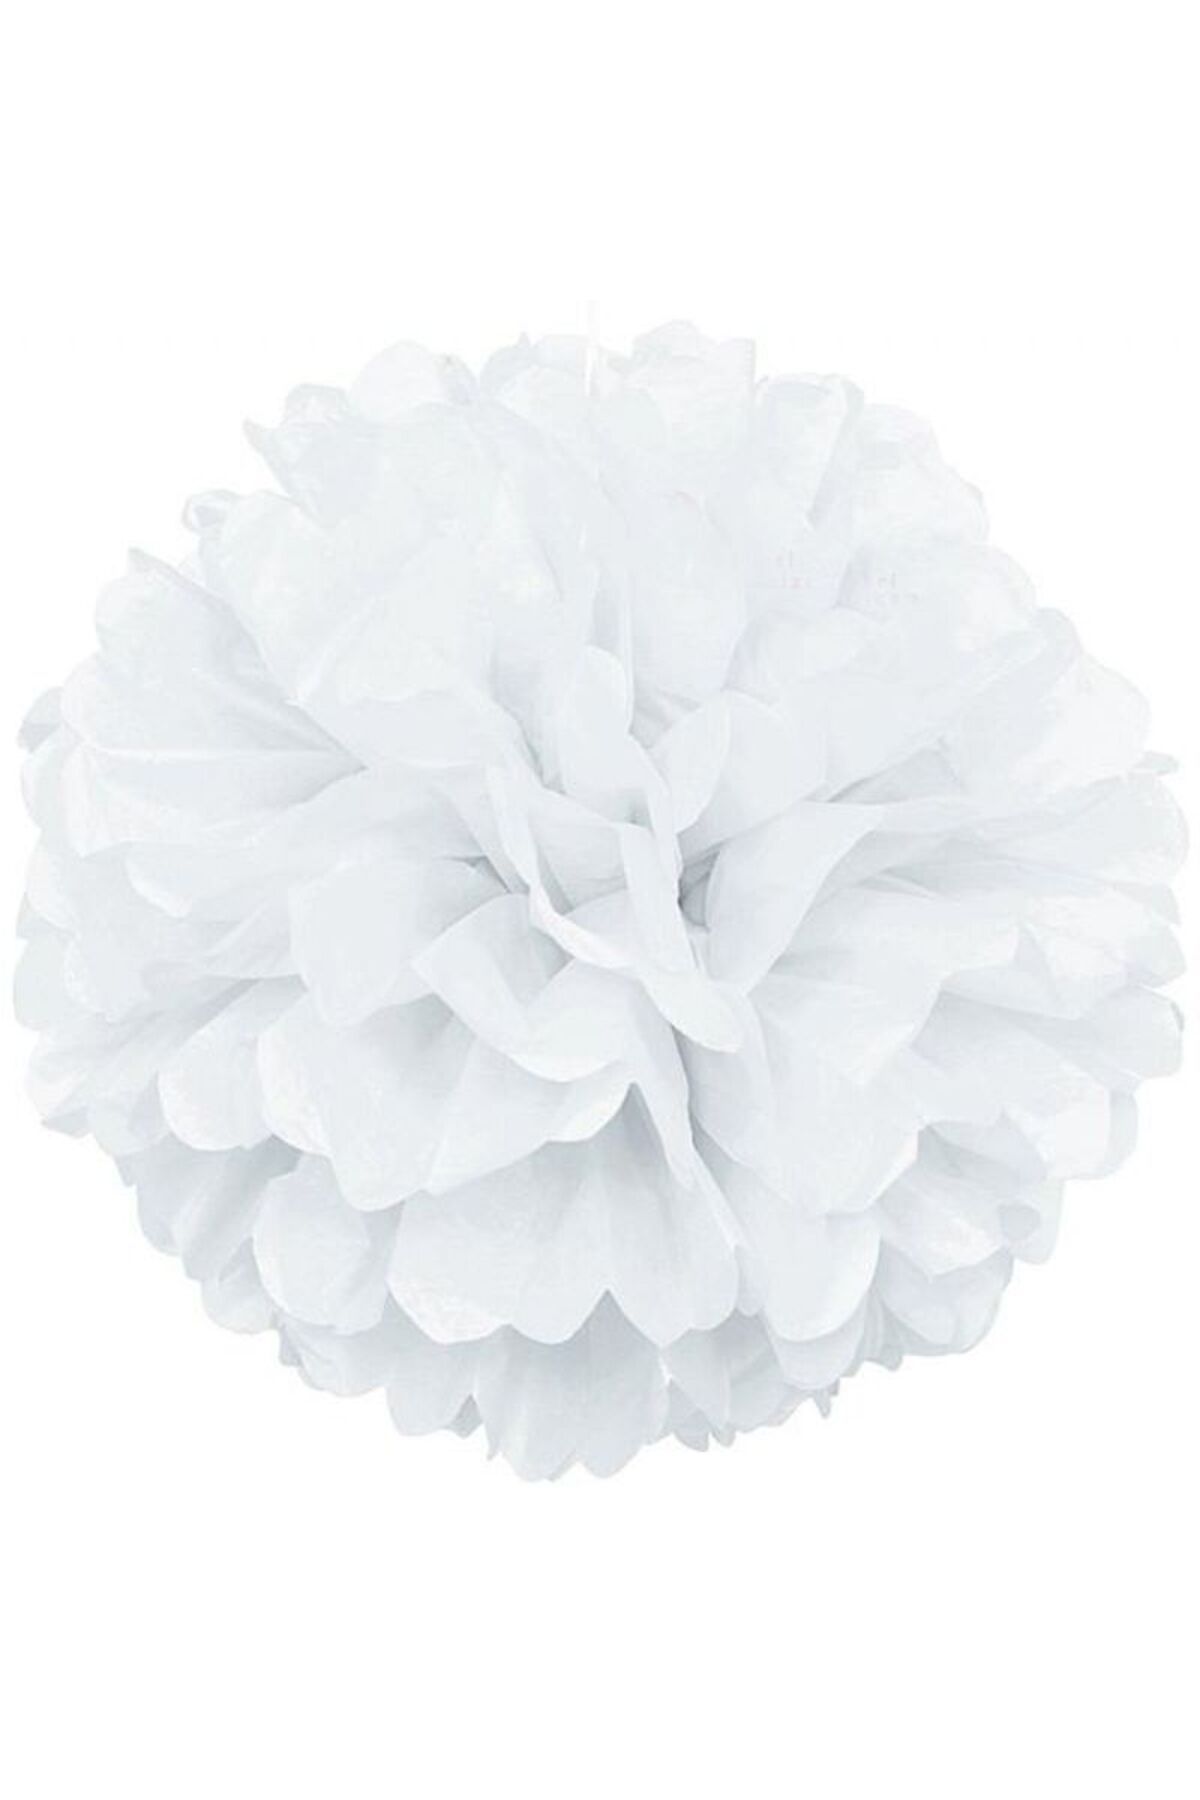 partidolu 1 Adet Beyaz Renk Pelur Kağıt Ponpon Çiçek Asma Süs 25 Cm.